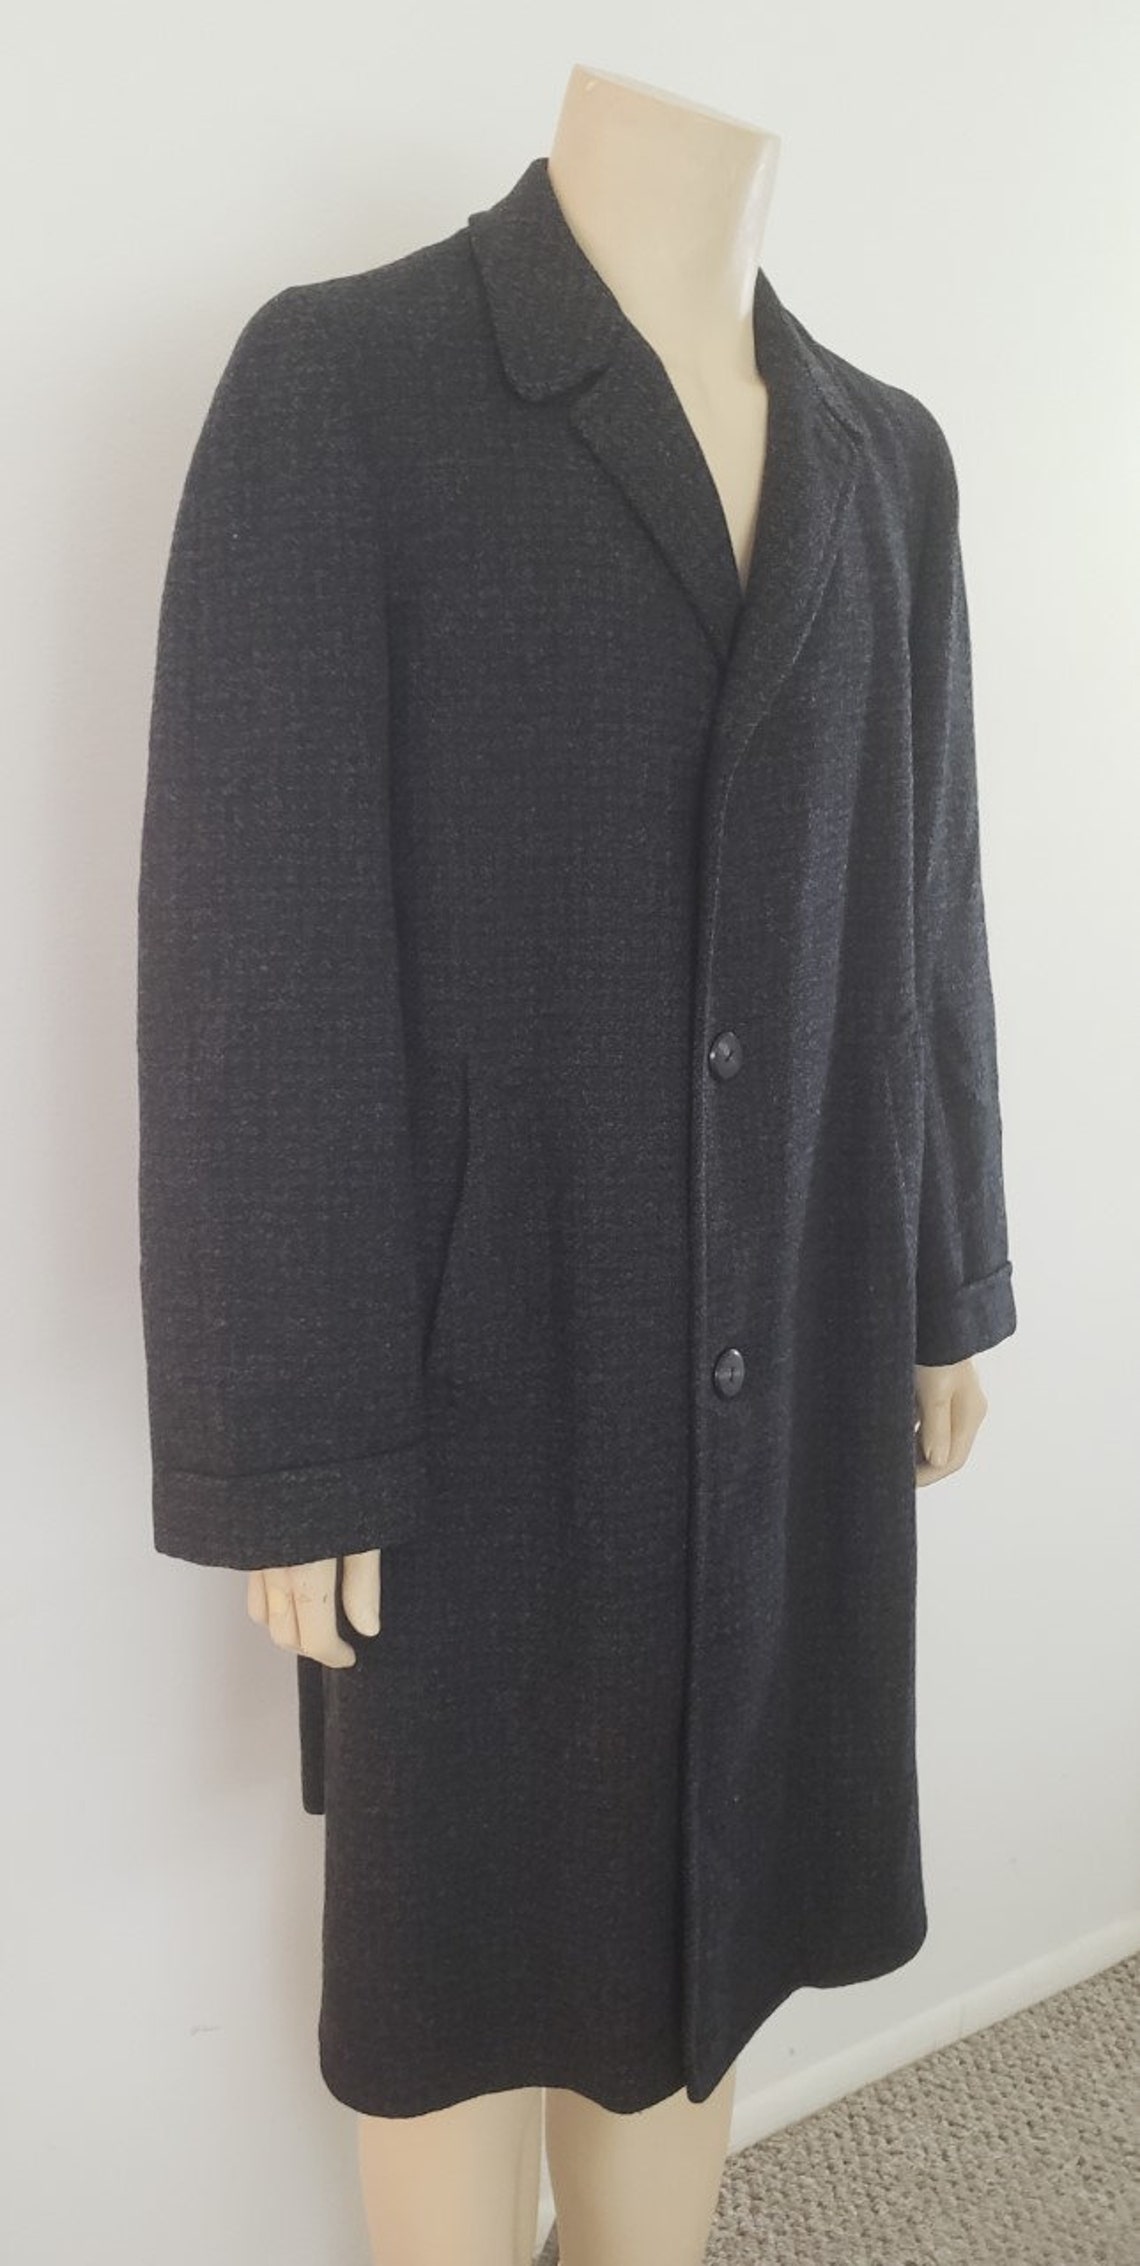 Men's overcoat 1950s M grey tweed trench Scotch | Etsy